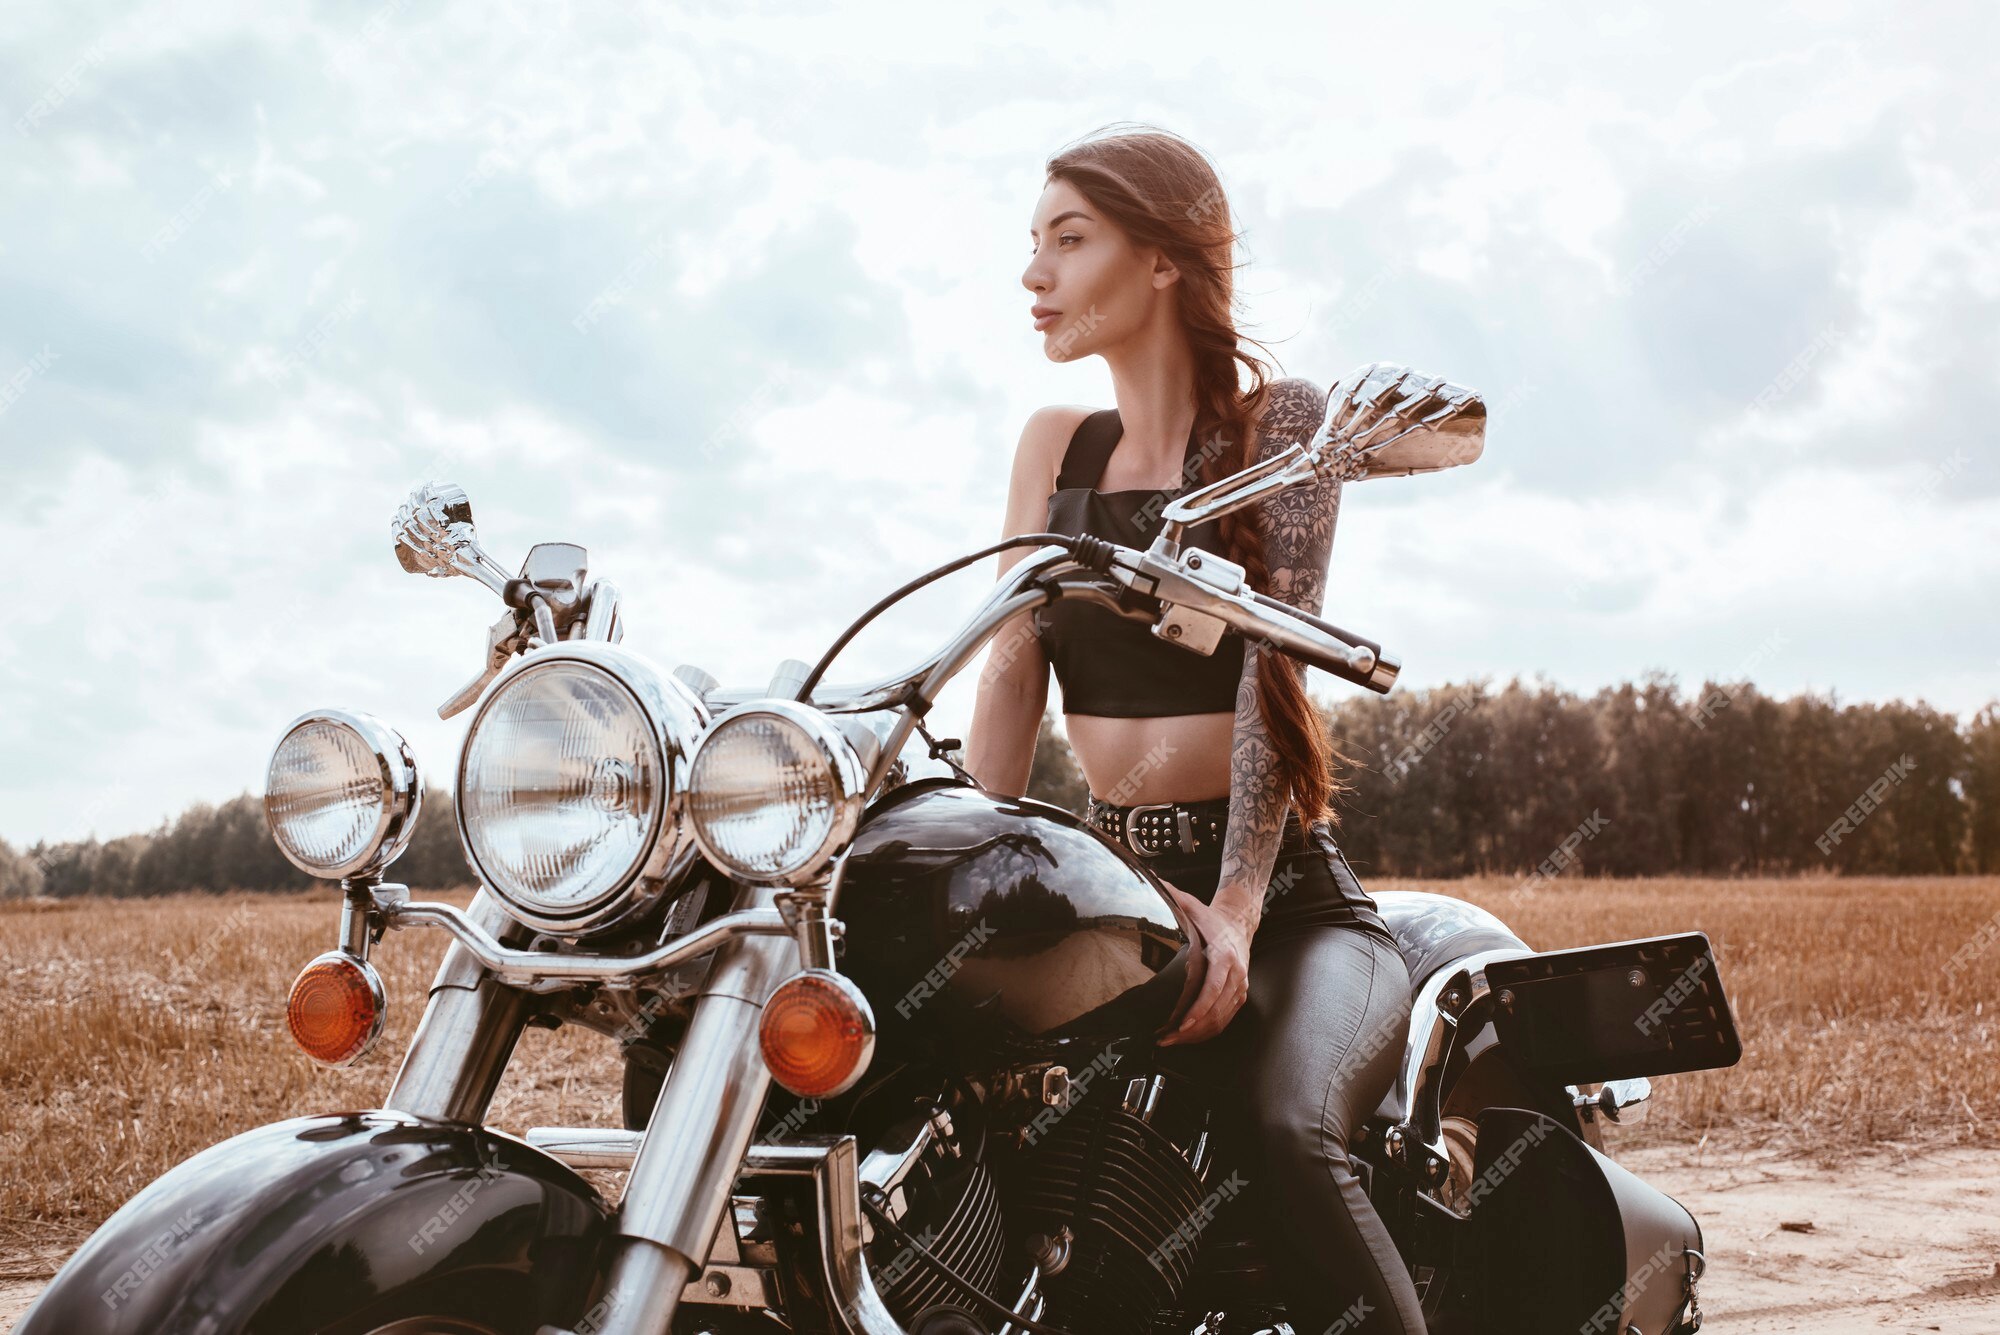 denise ann garcia add motorcycle sexy girl photo